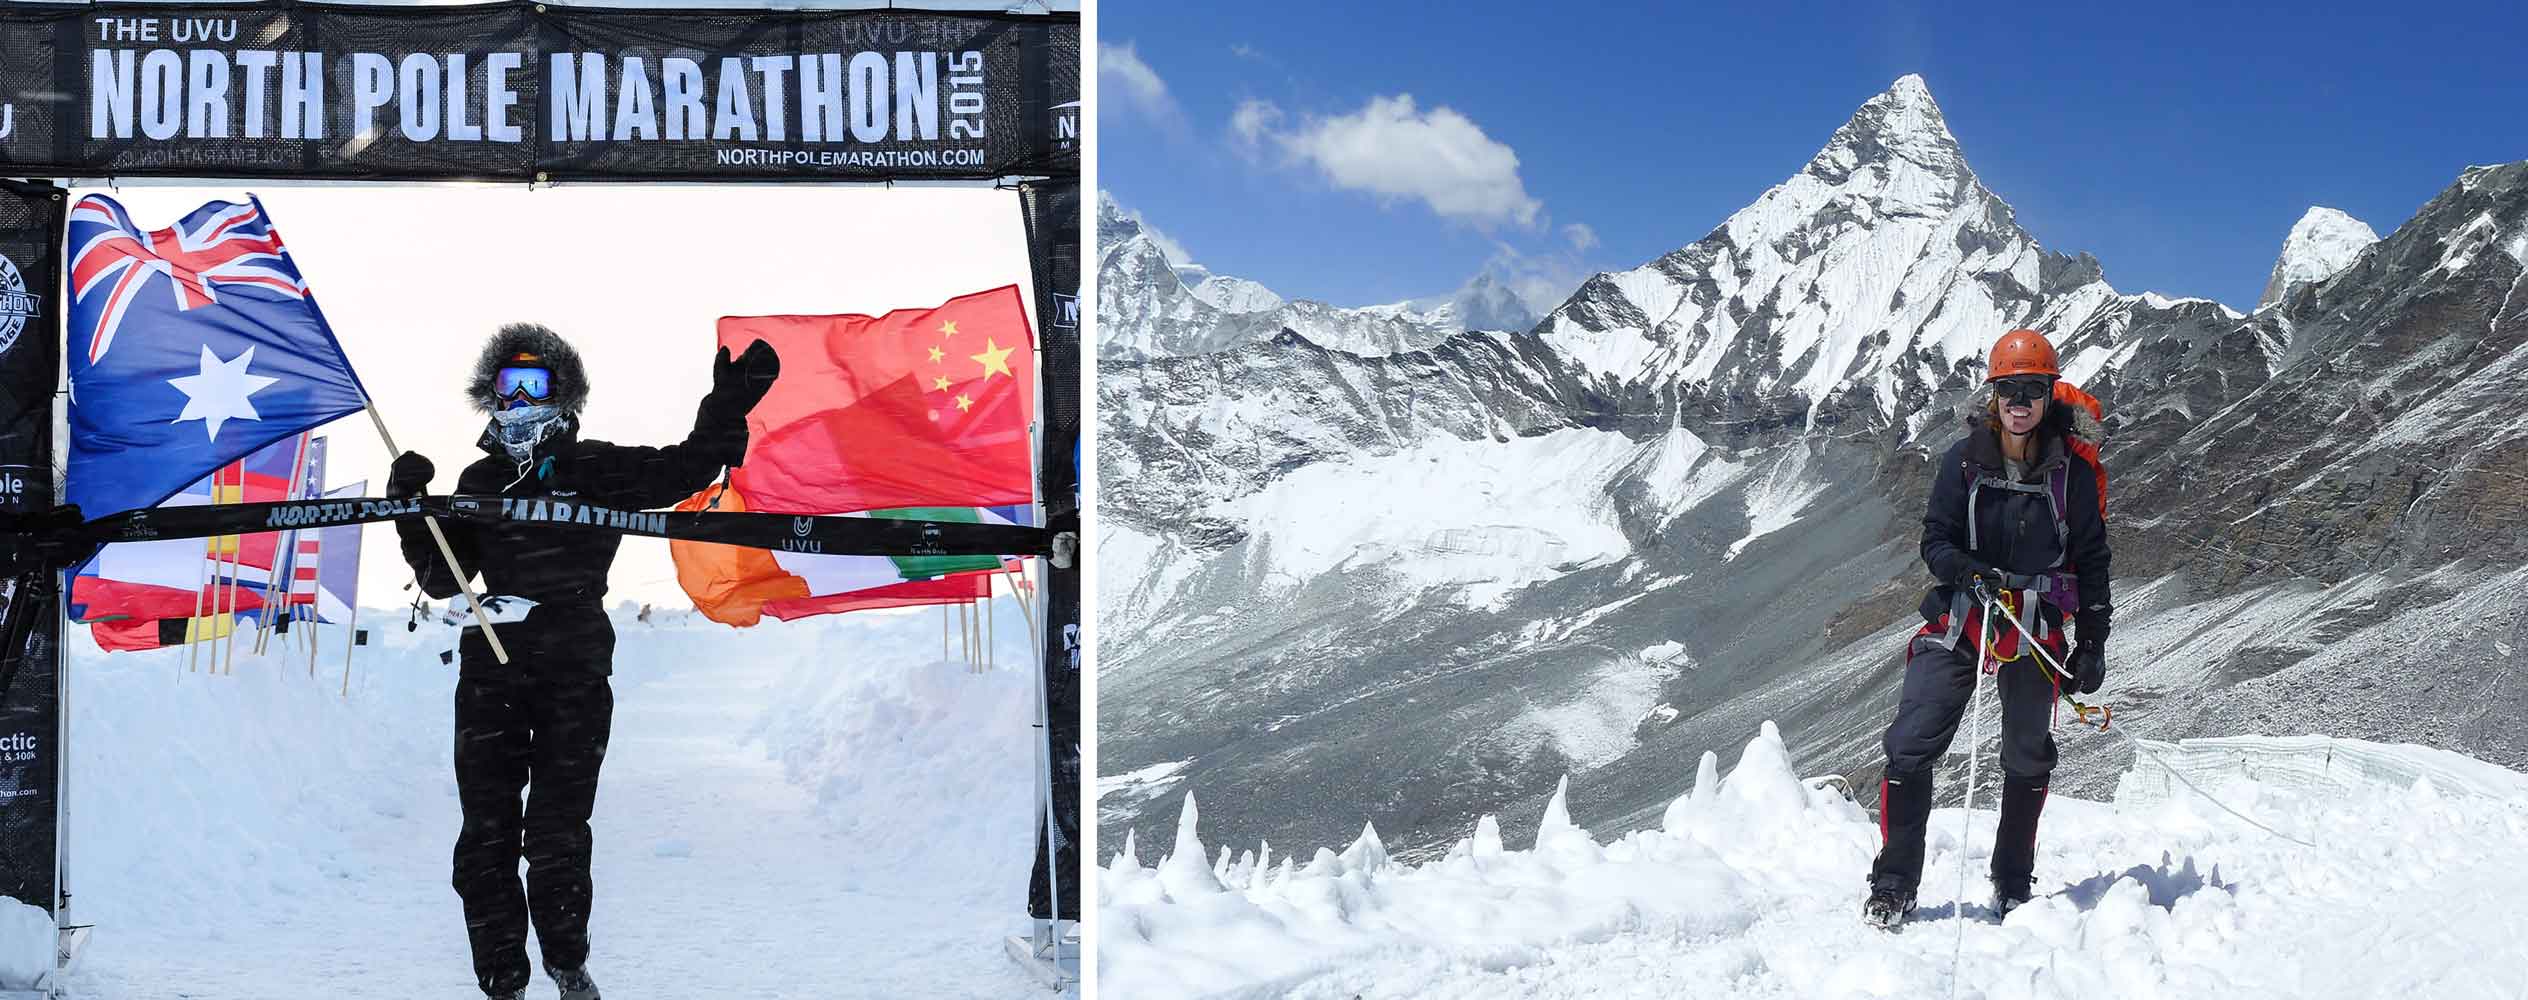 Heather Hawkins adventure runner - North Pole Marathon and hiking the Great Himalayan Trail